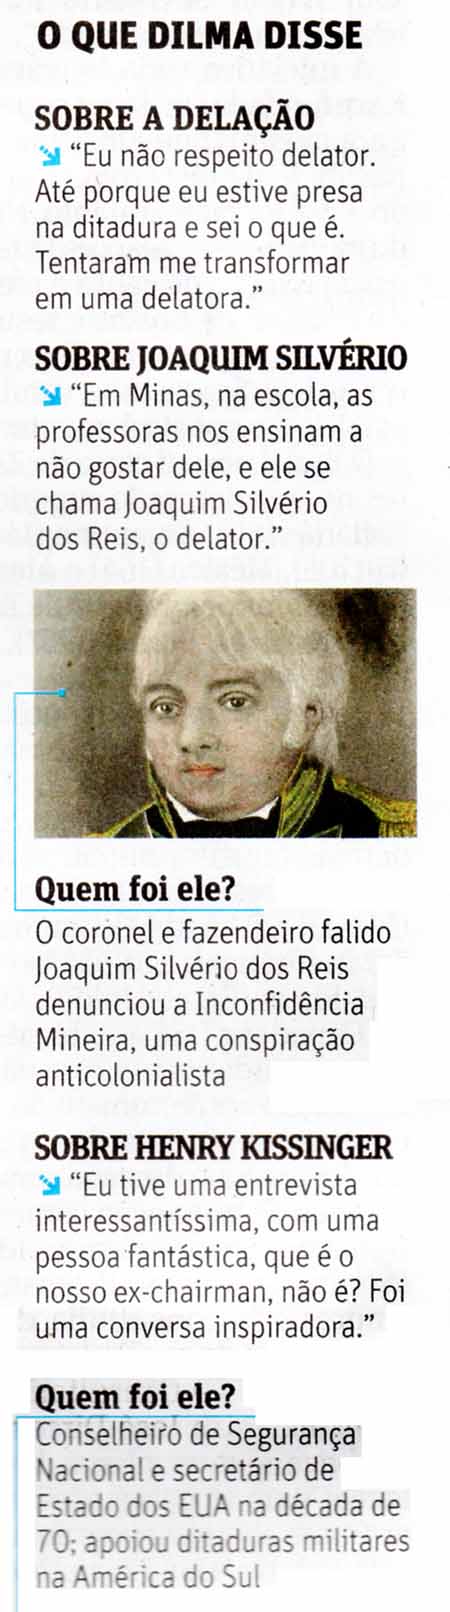 Folha de So Paulo - 30/06/15 - O que Dilma disse